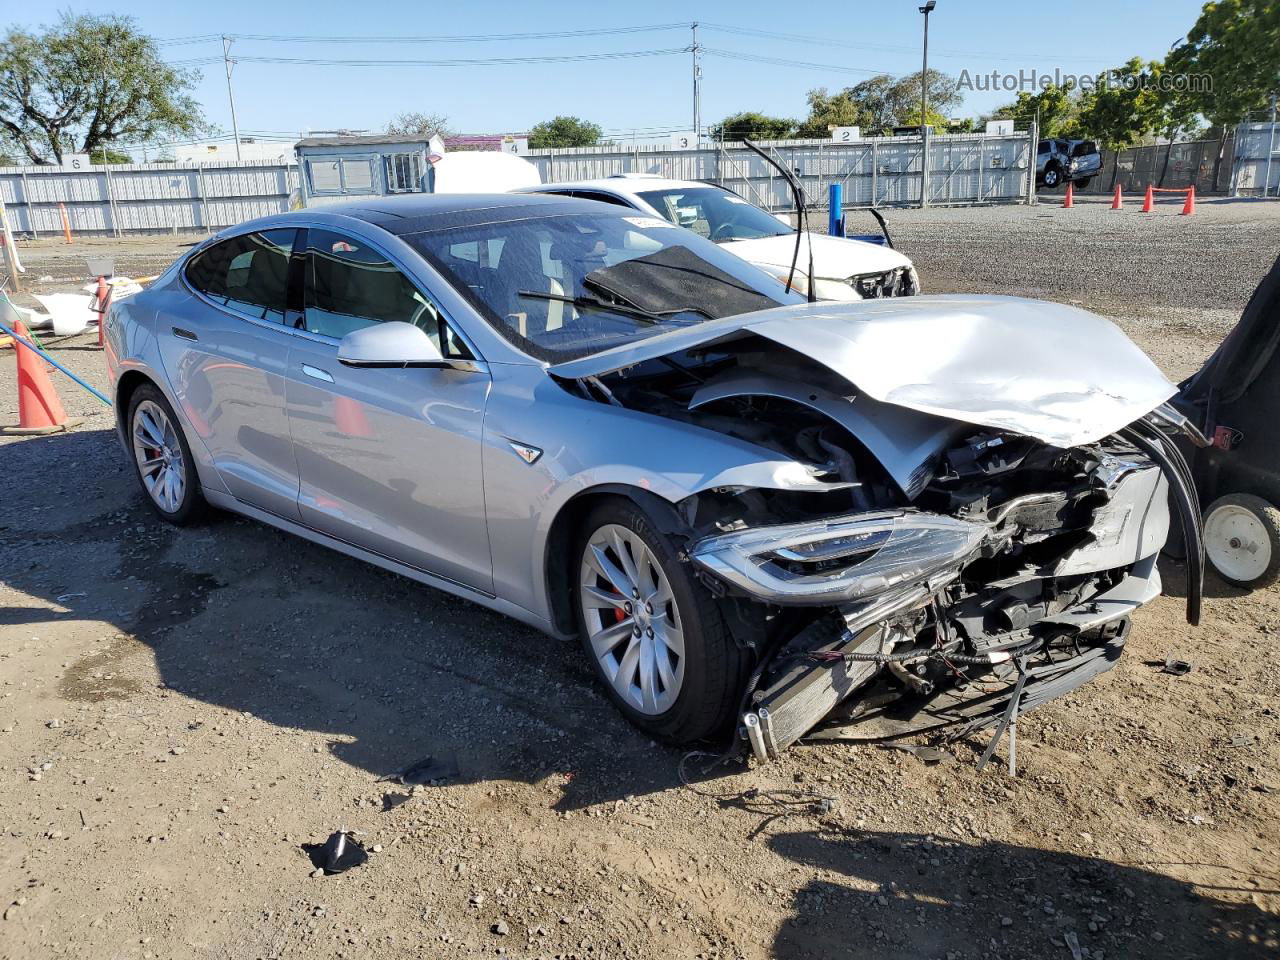 2016 Tesla Model S  Silver vin: 5YJSA1E43GF141177